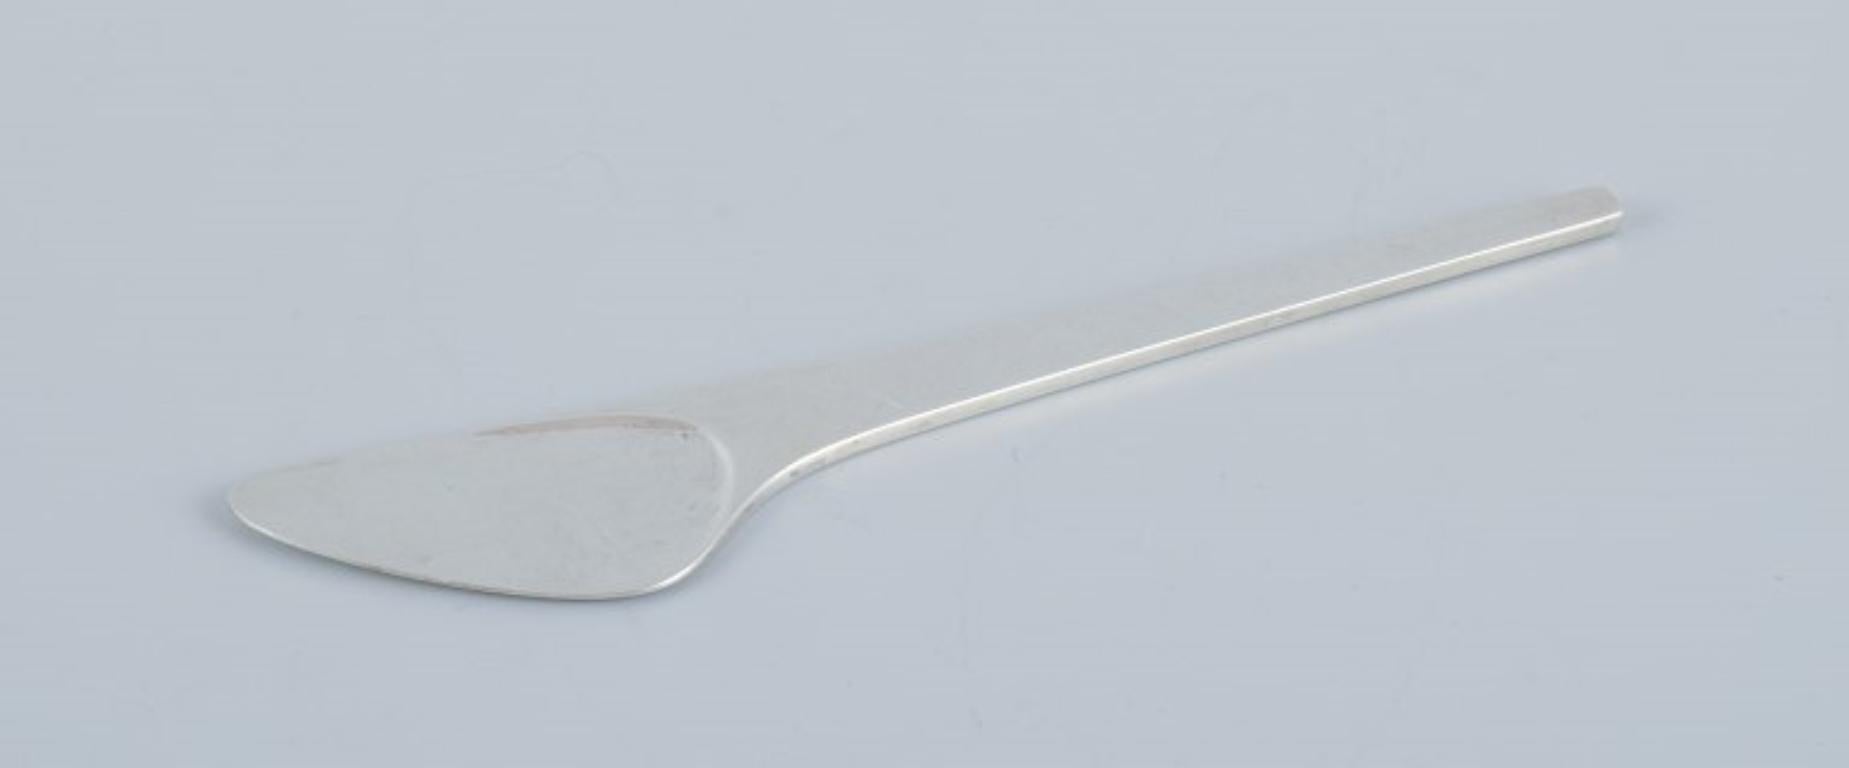 Scandinavian Modern Georg Jensen, Caravel, butter knife in sterling silver. Modernist design. For Sale